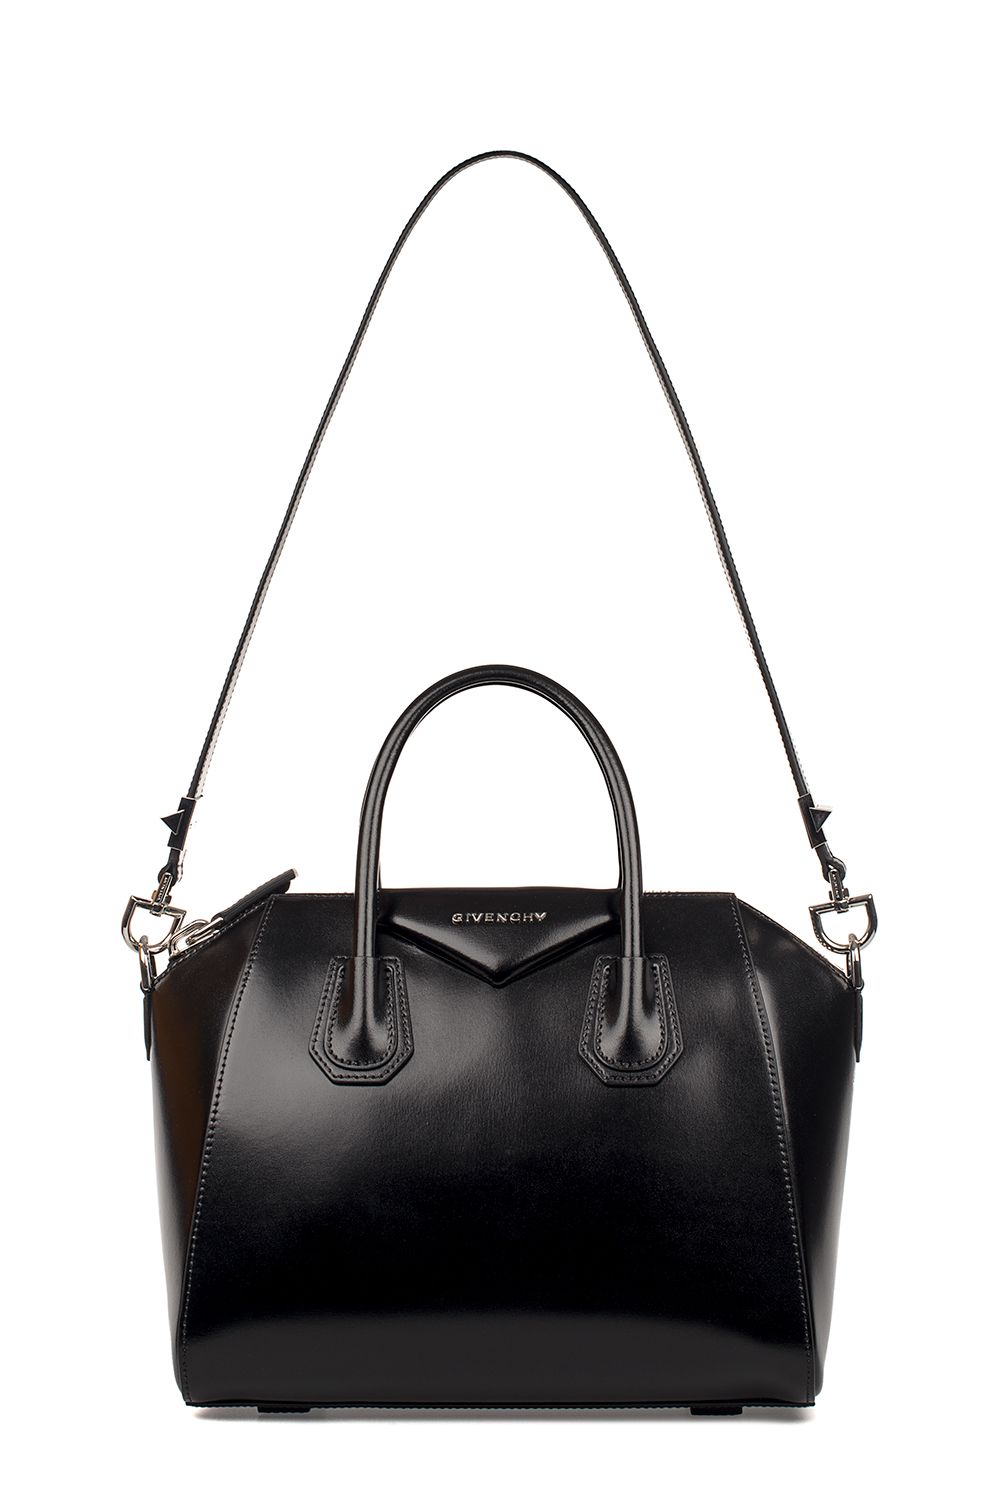 Givenchy Black Small Antigona Brushed Leather Top Handle Bag | ModeSens